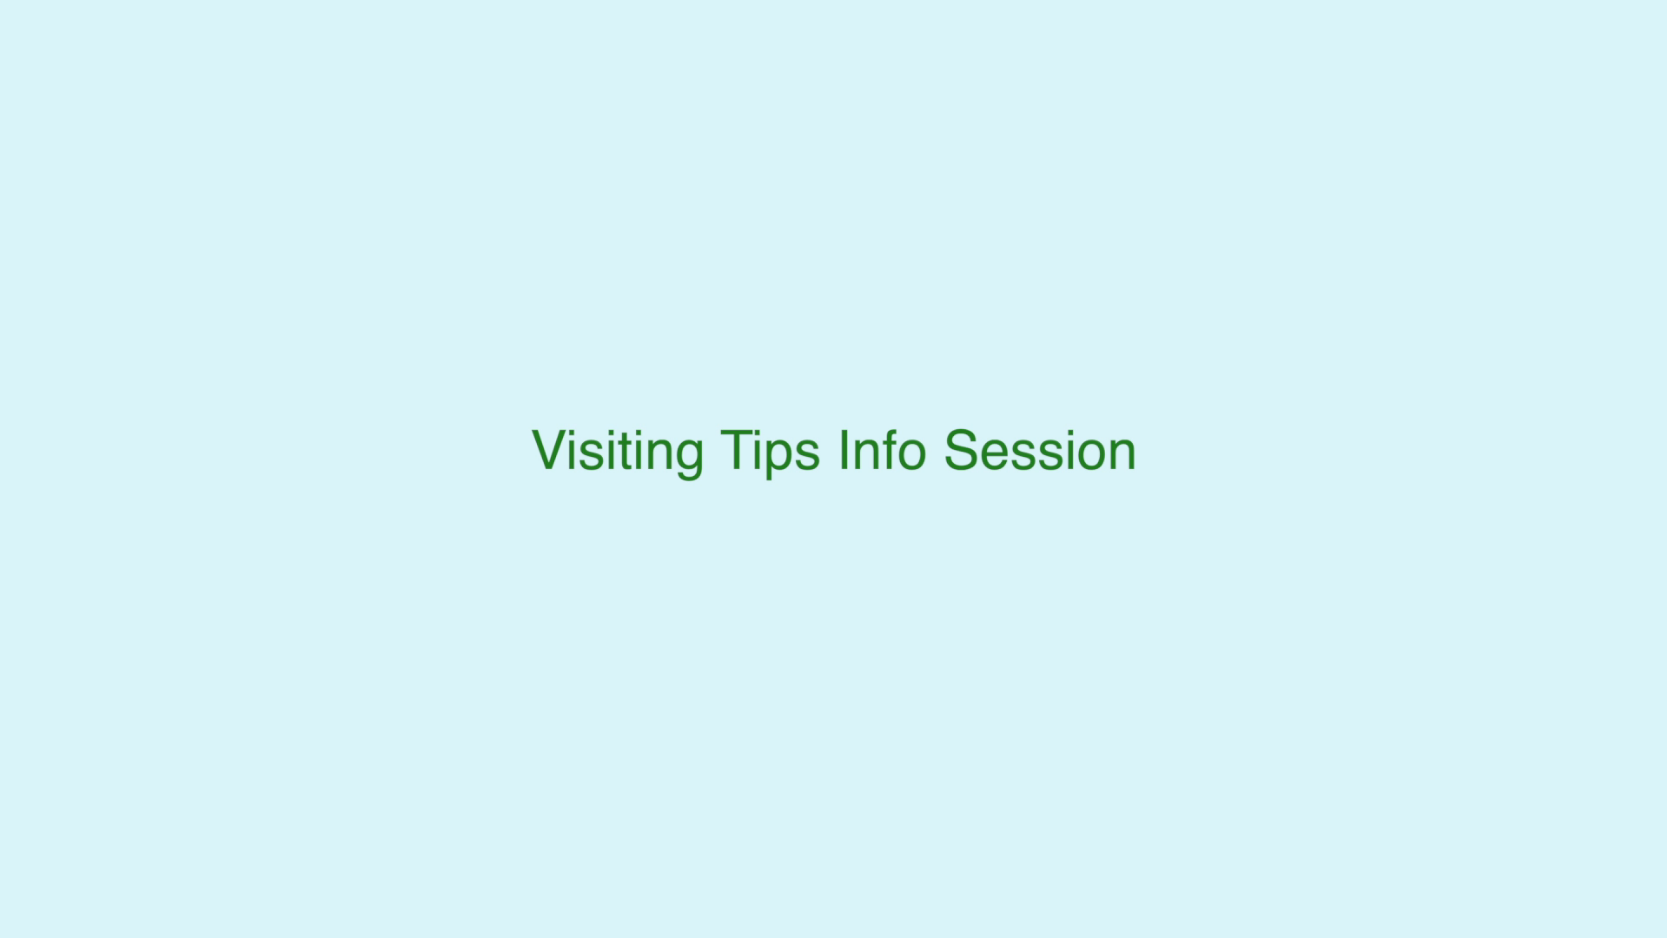 ACS Visiting Tips Info Session Light Blue Background Splash Image